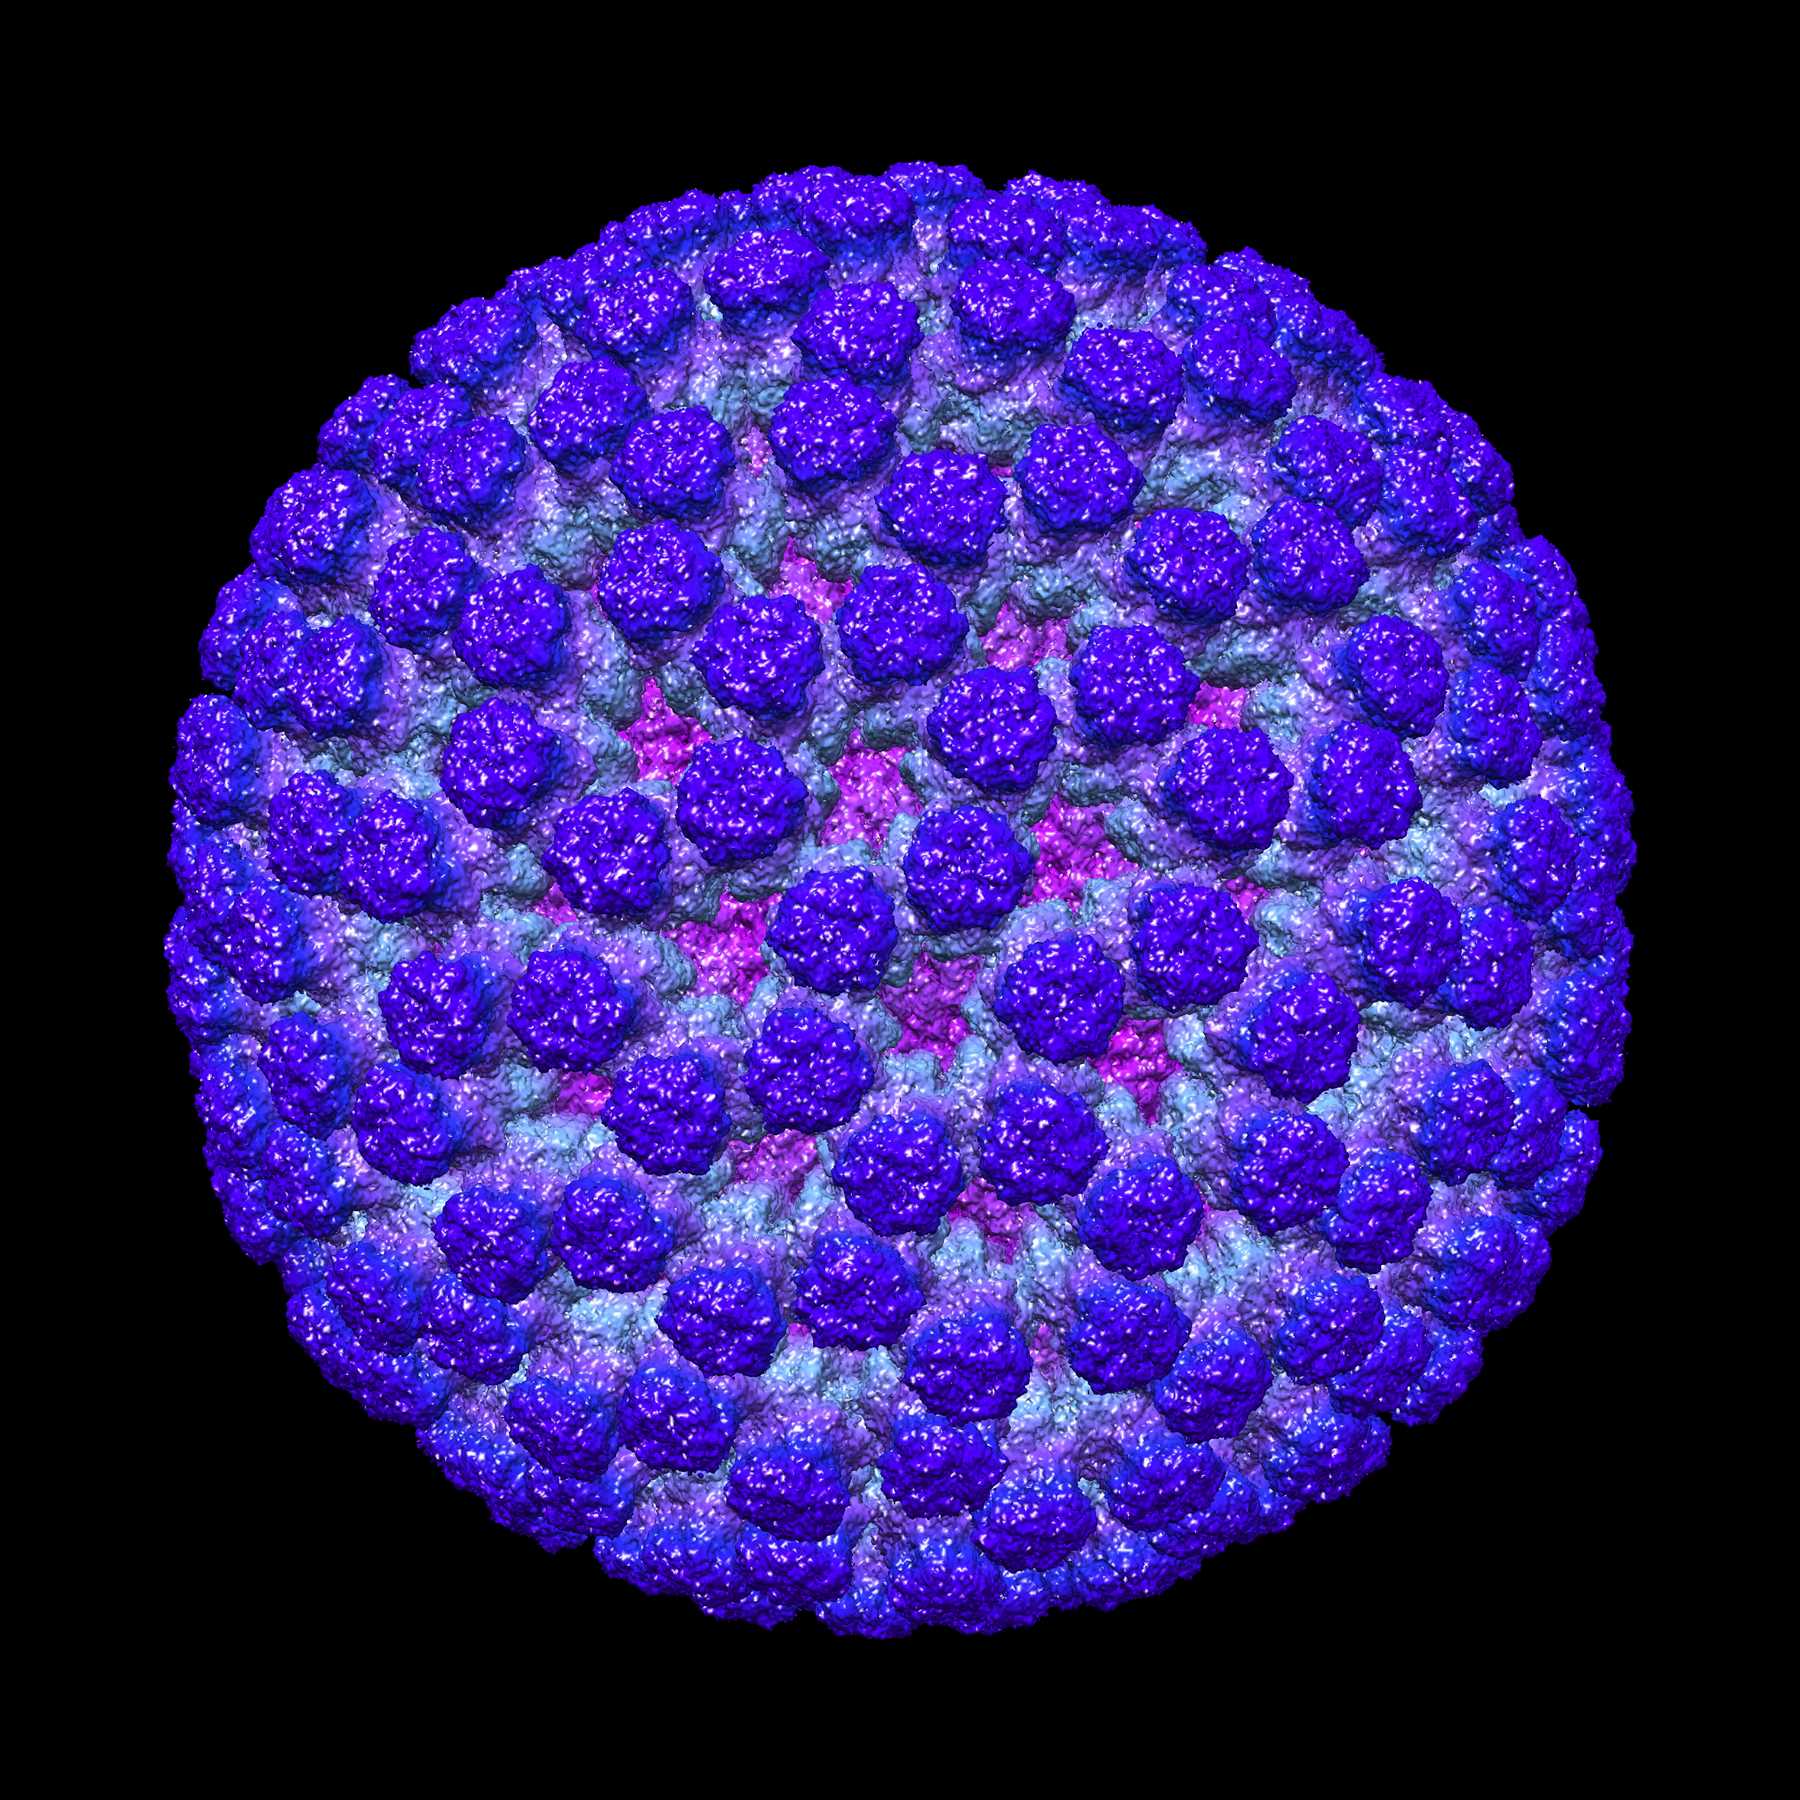 Rotavirus structure